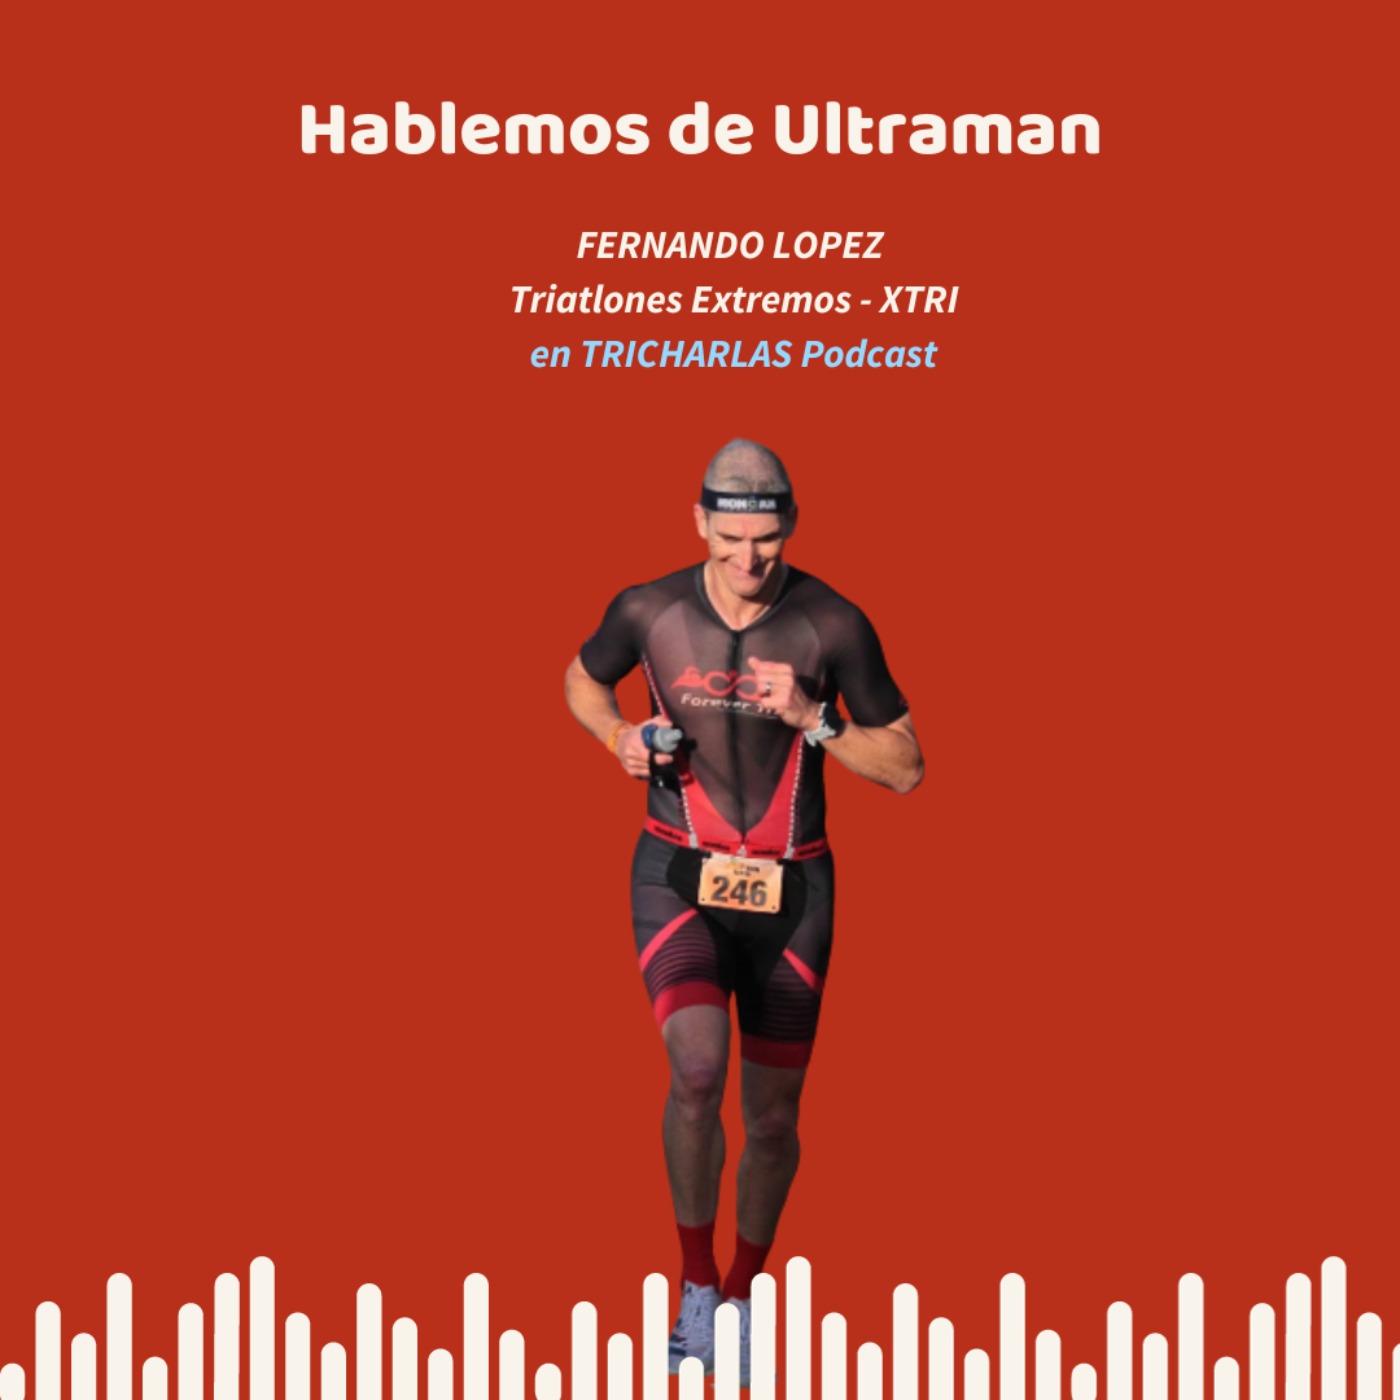 Episodio 126 - Charla sobre Ultraman con Fernando Lopez